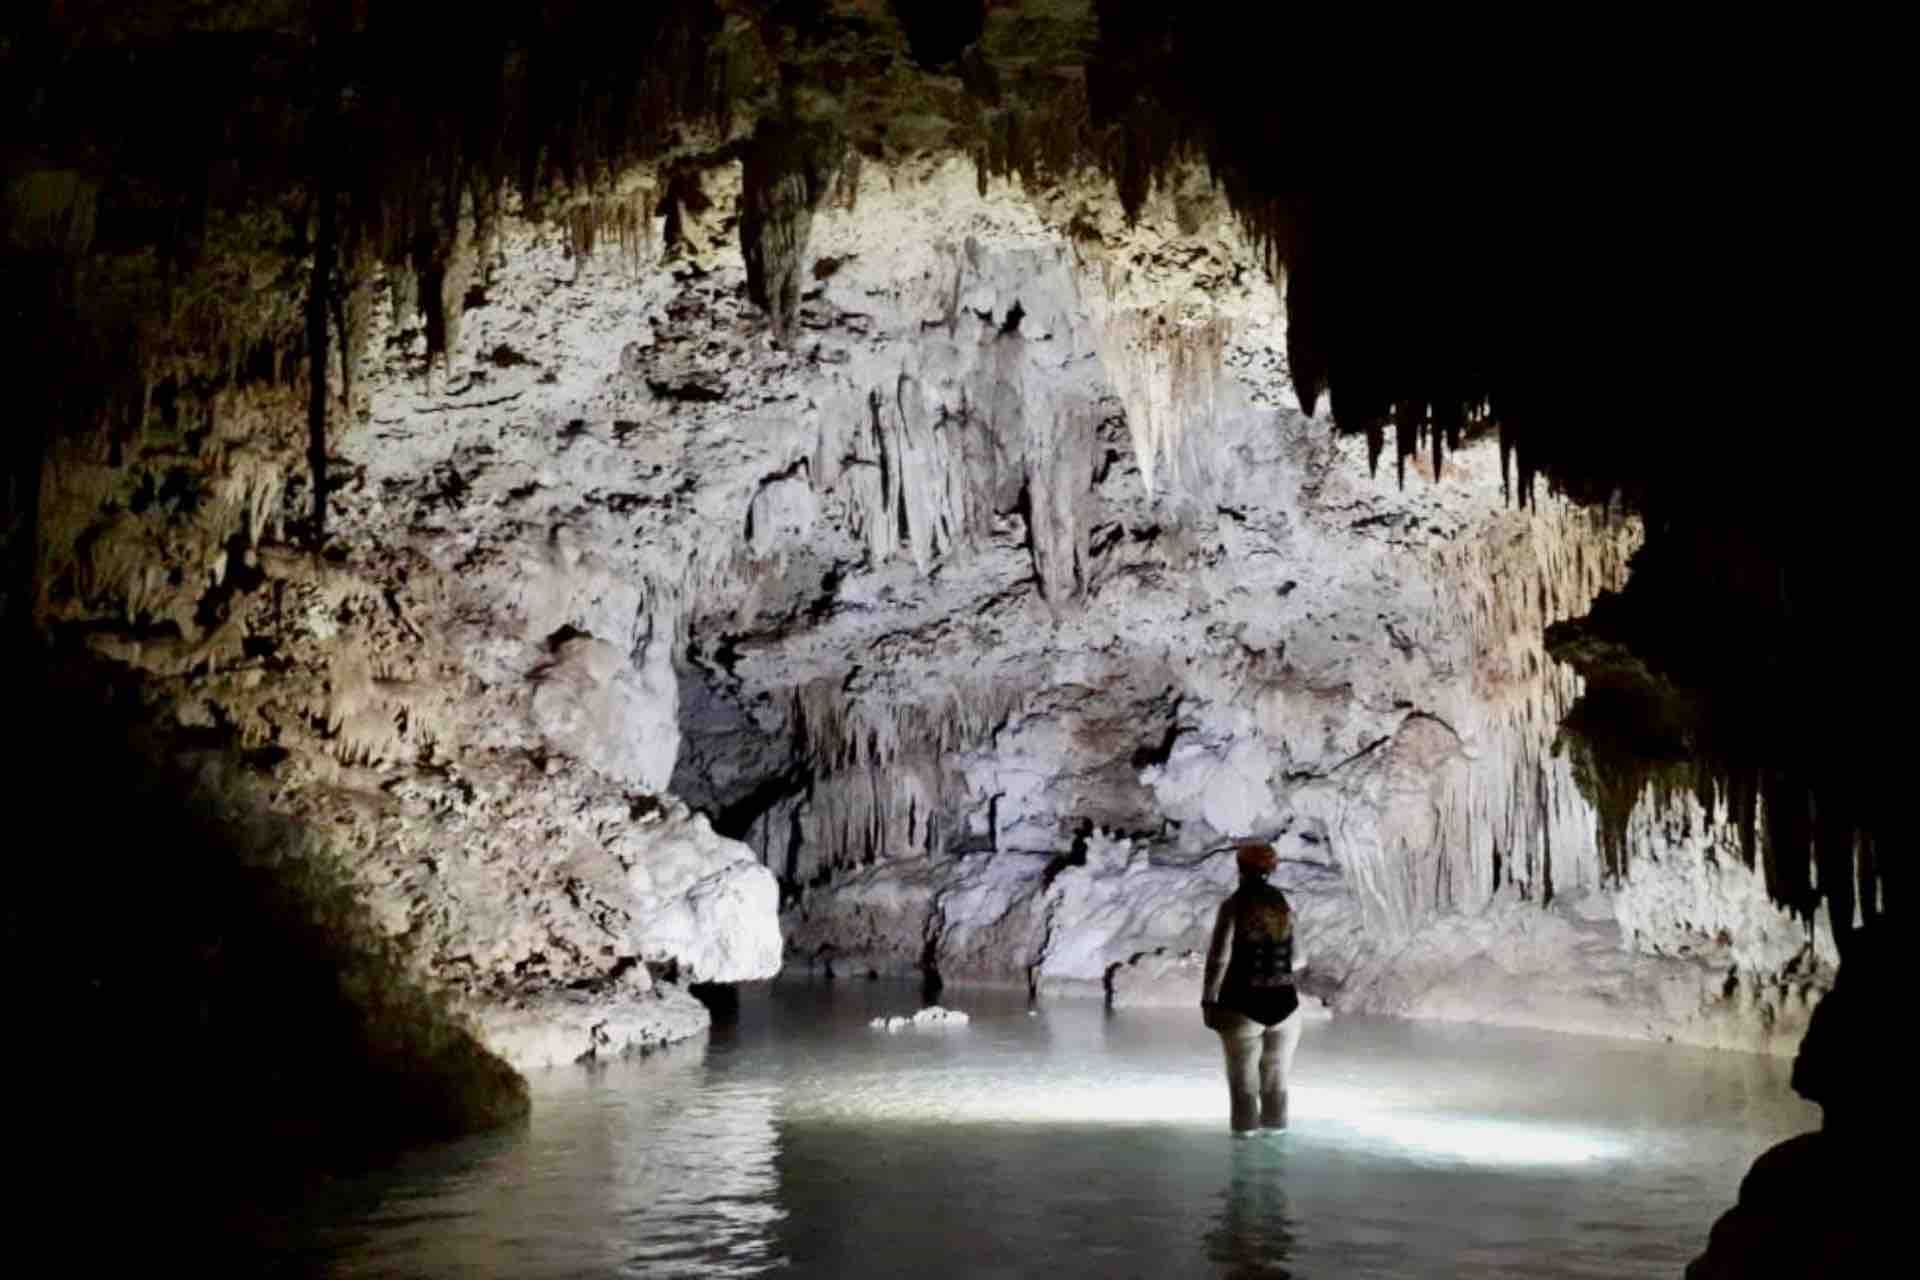 Cenote Riviera Maya Mexico Cenote tour guest looking at stalactites